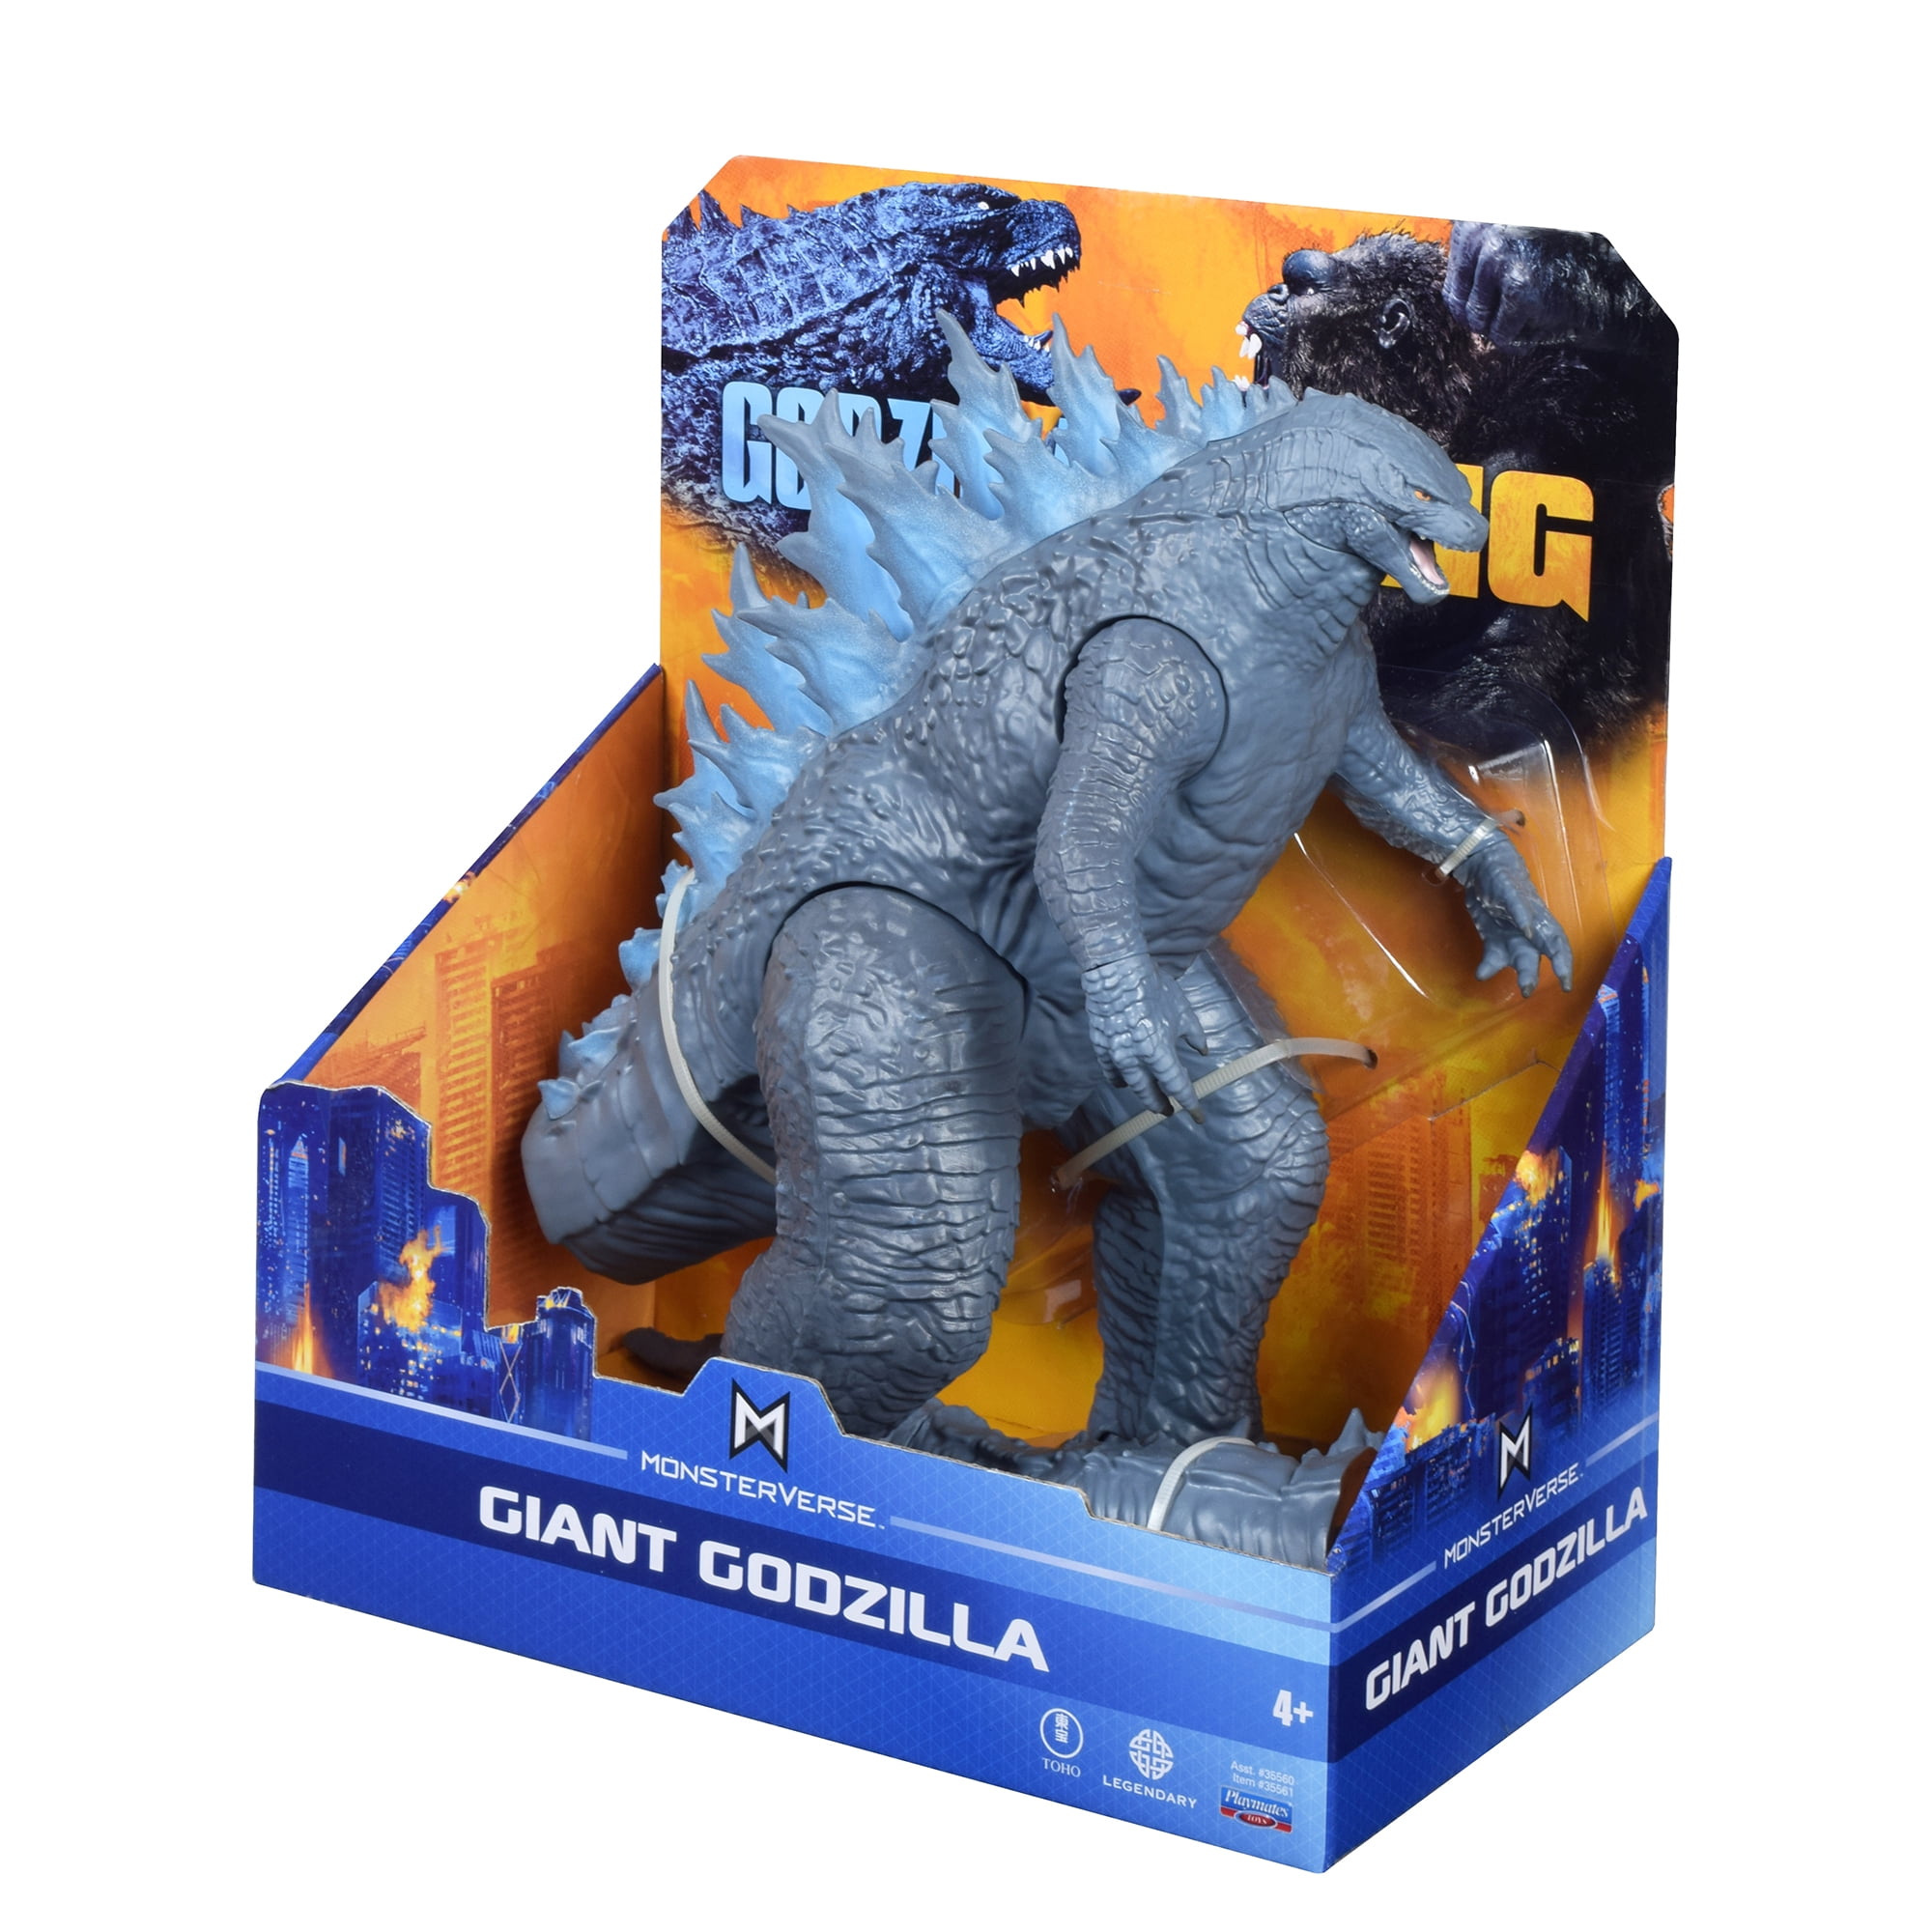 2020 "GIANT GODZILLA" Playmates Toys 11" Godzilla vs Kong Action Figure 